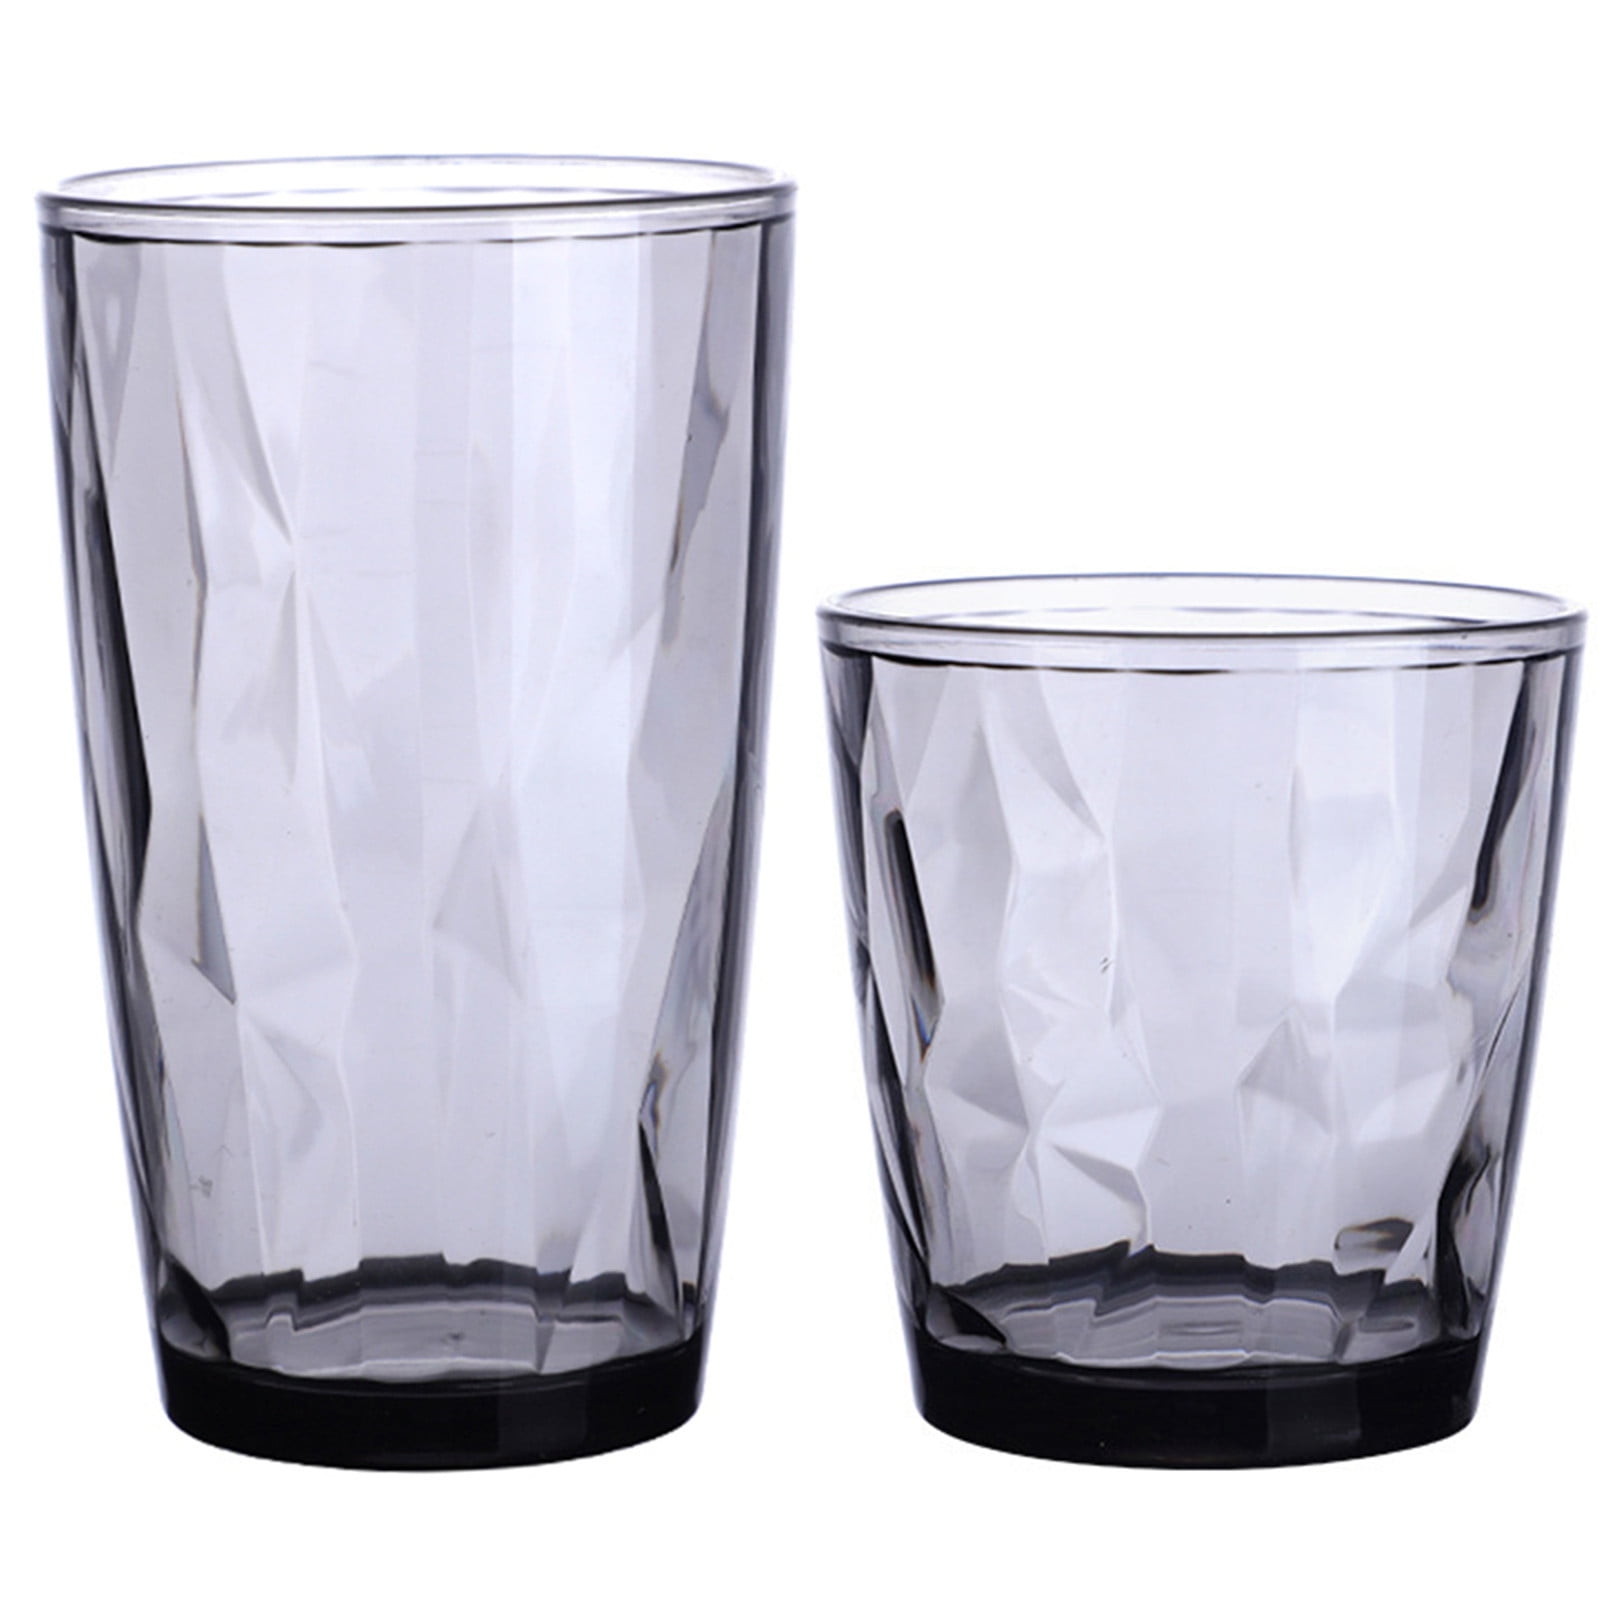 PWFE 10 oz and 16.9 oz Premium Drinking Glasses - Set of 2